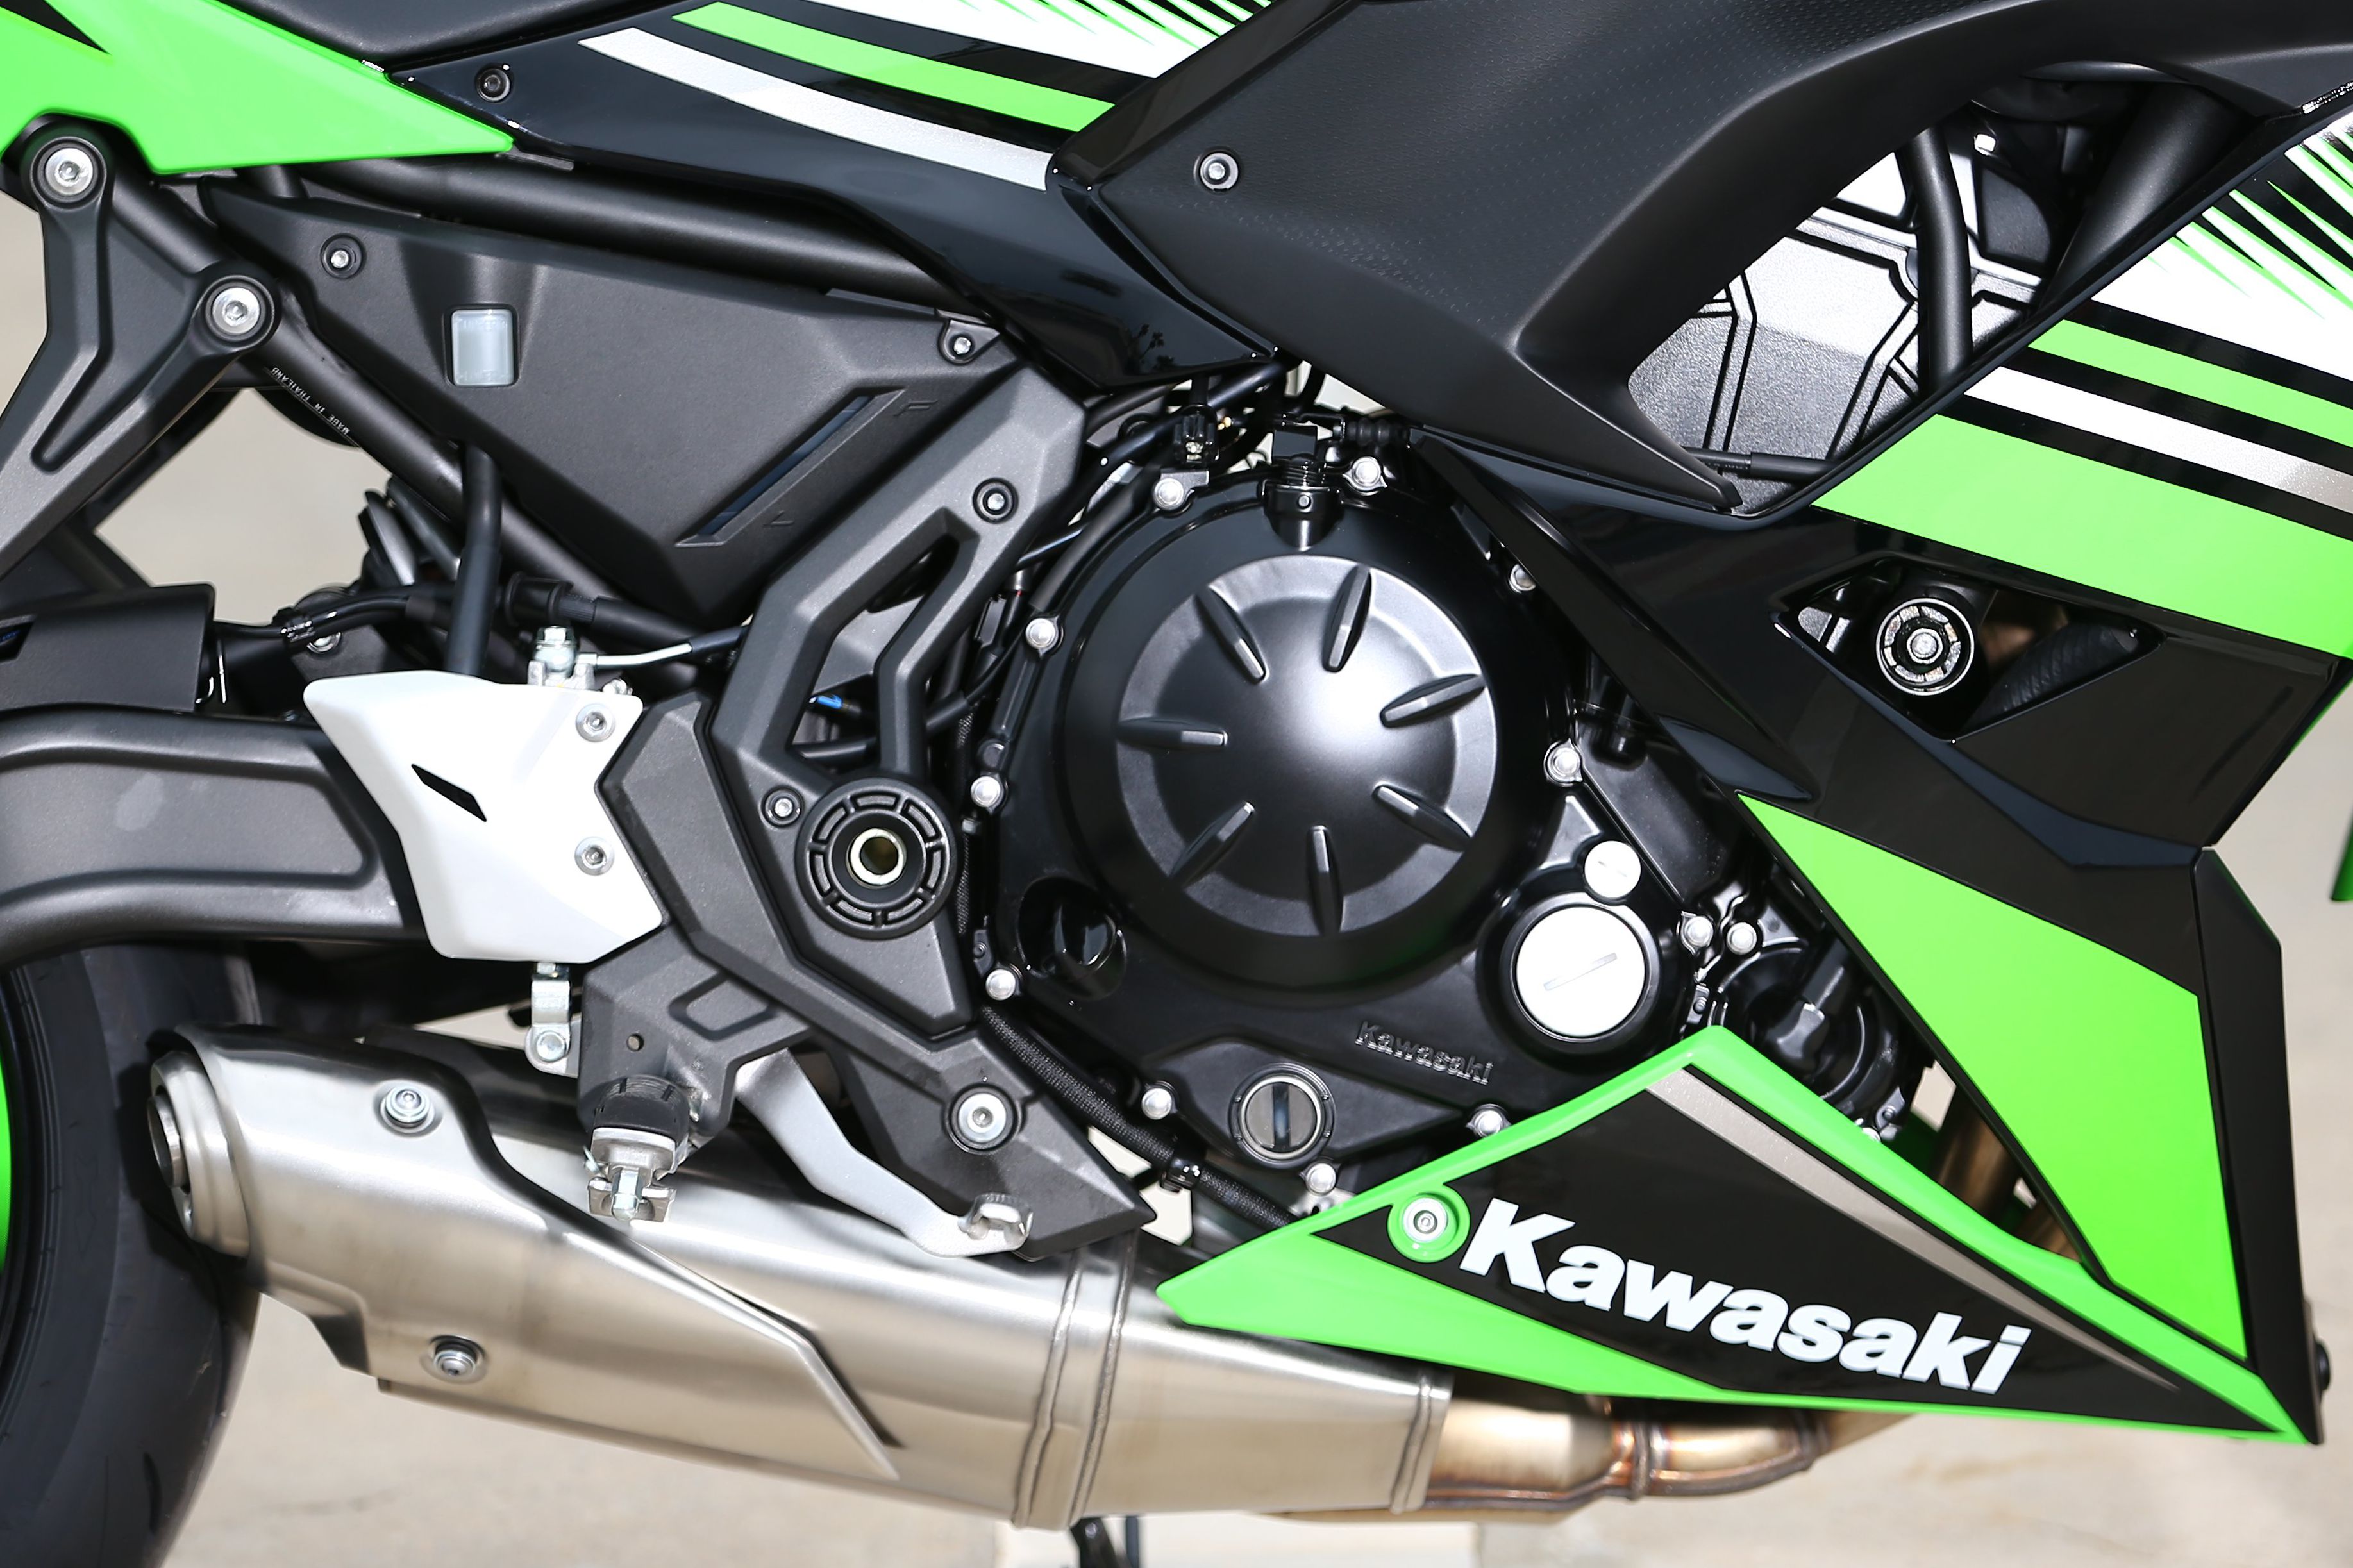 Kawasaki Ninja 650 engine